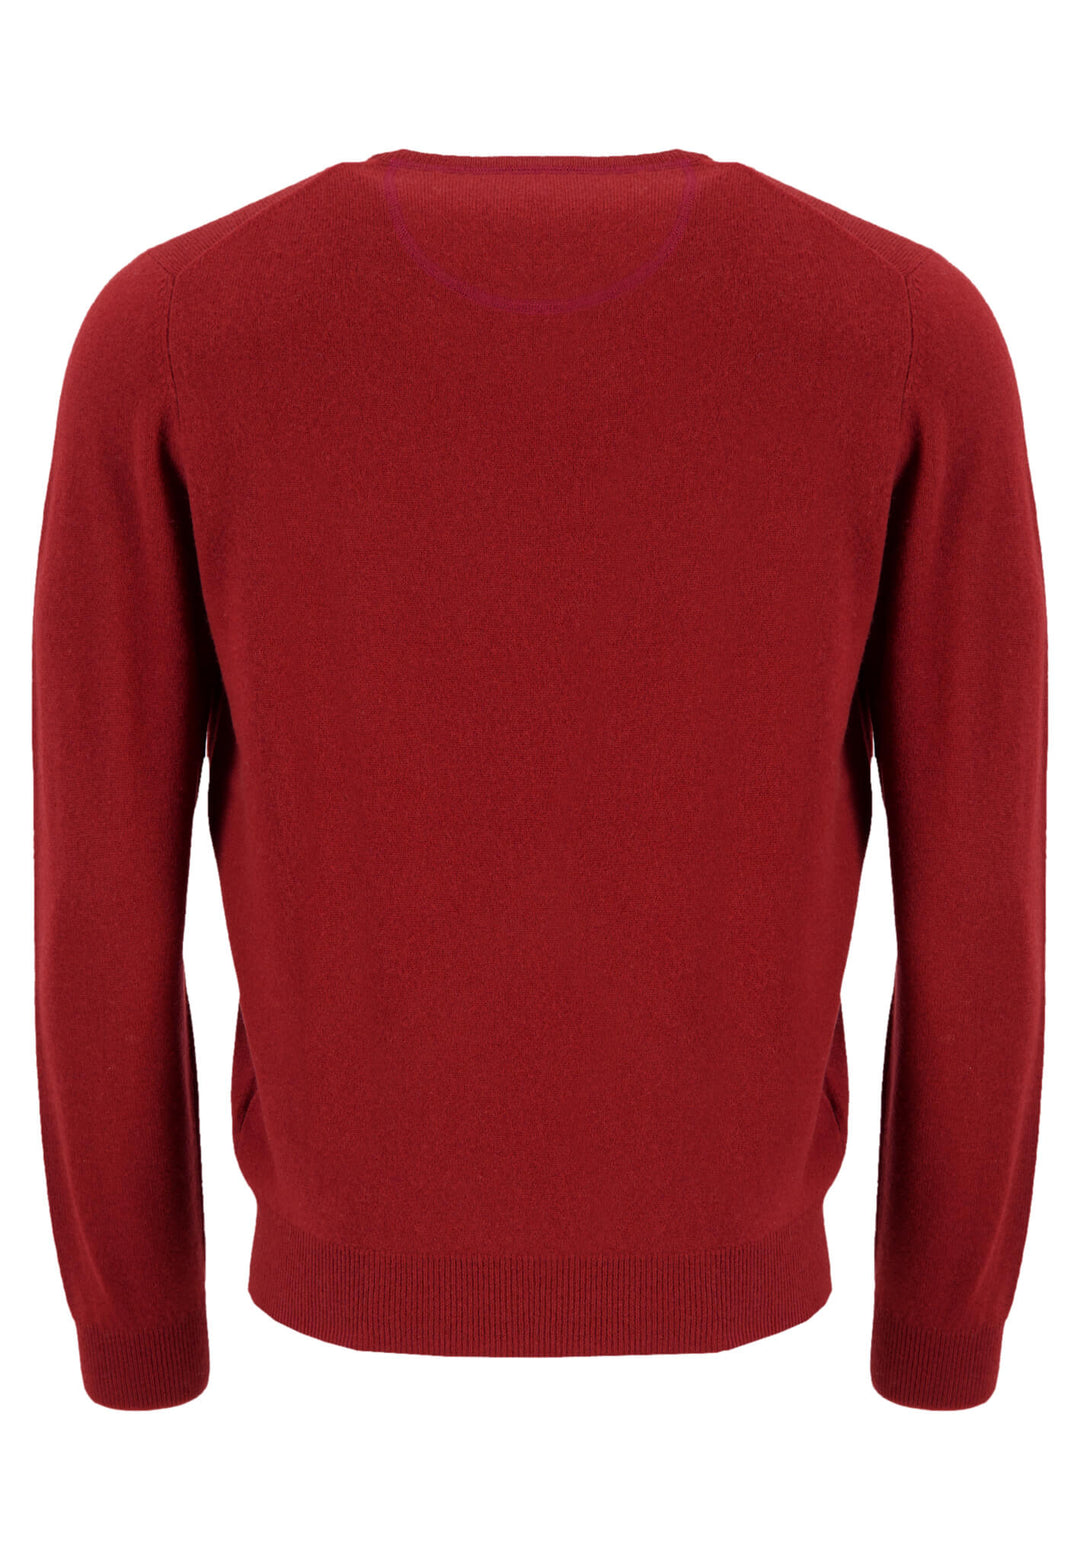 Weicher Pullover aus Merino-Kaschmir Shop – Online | FYNCH-HATTON Offizieller